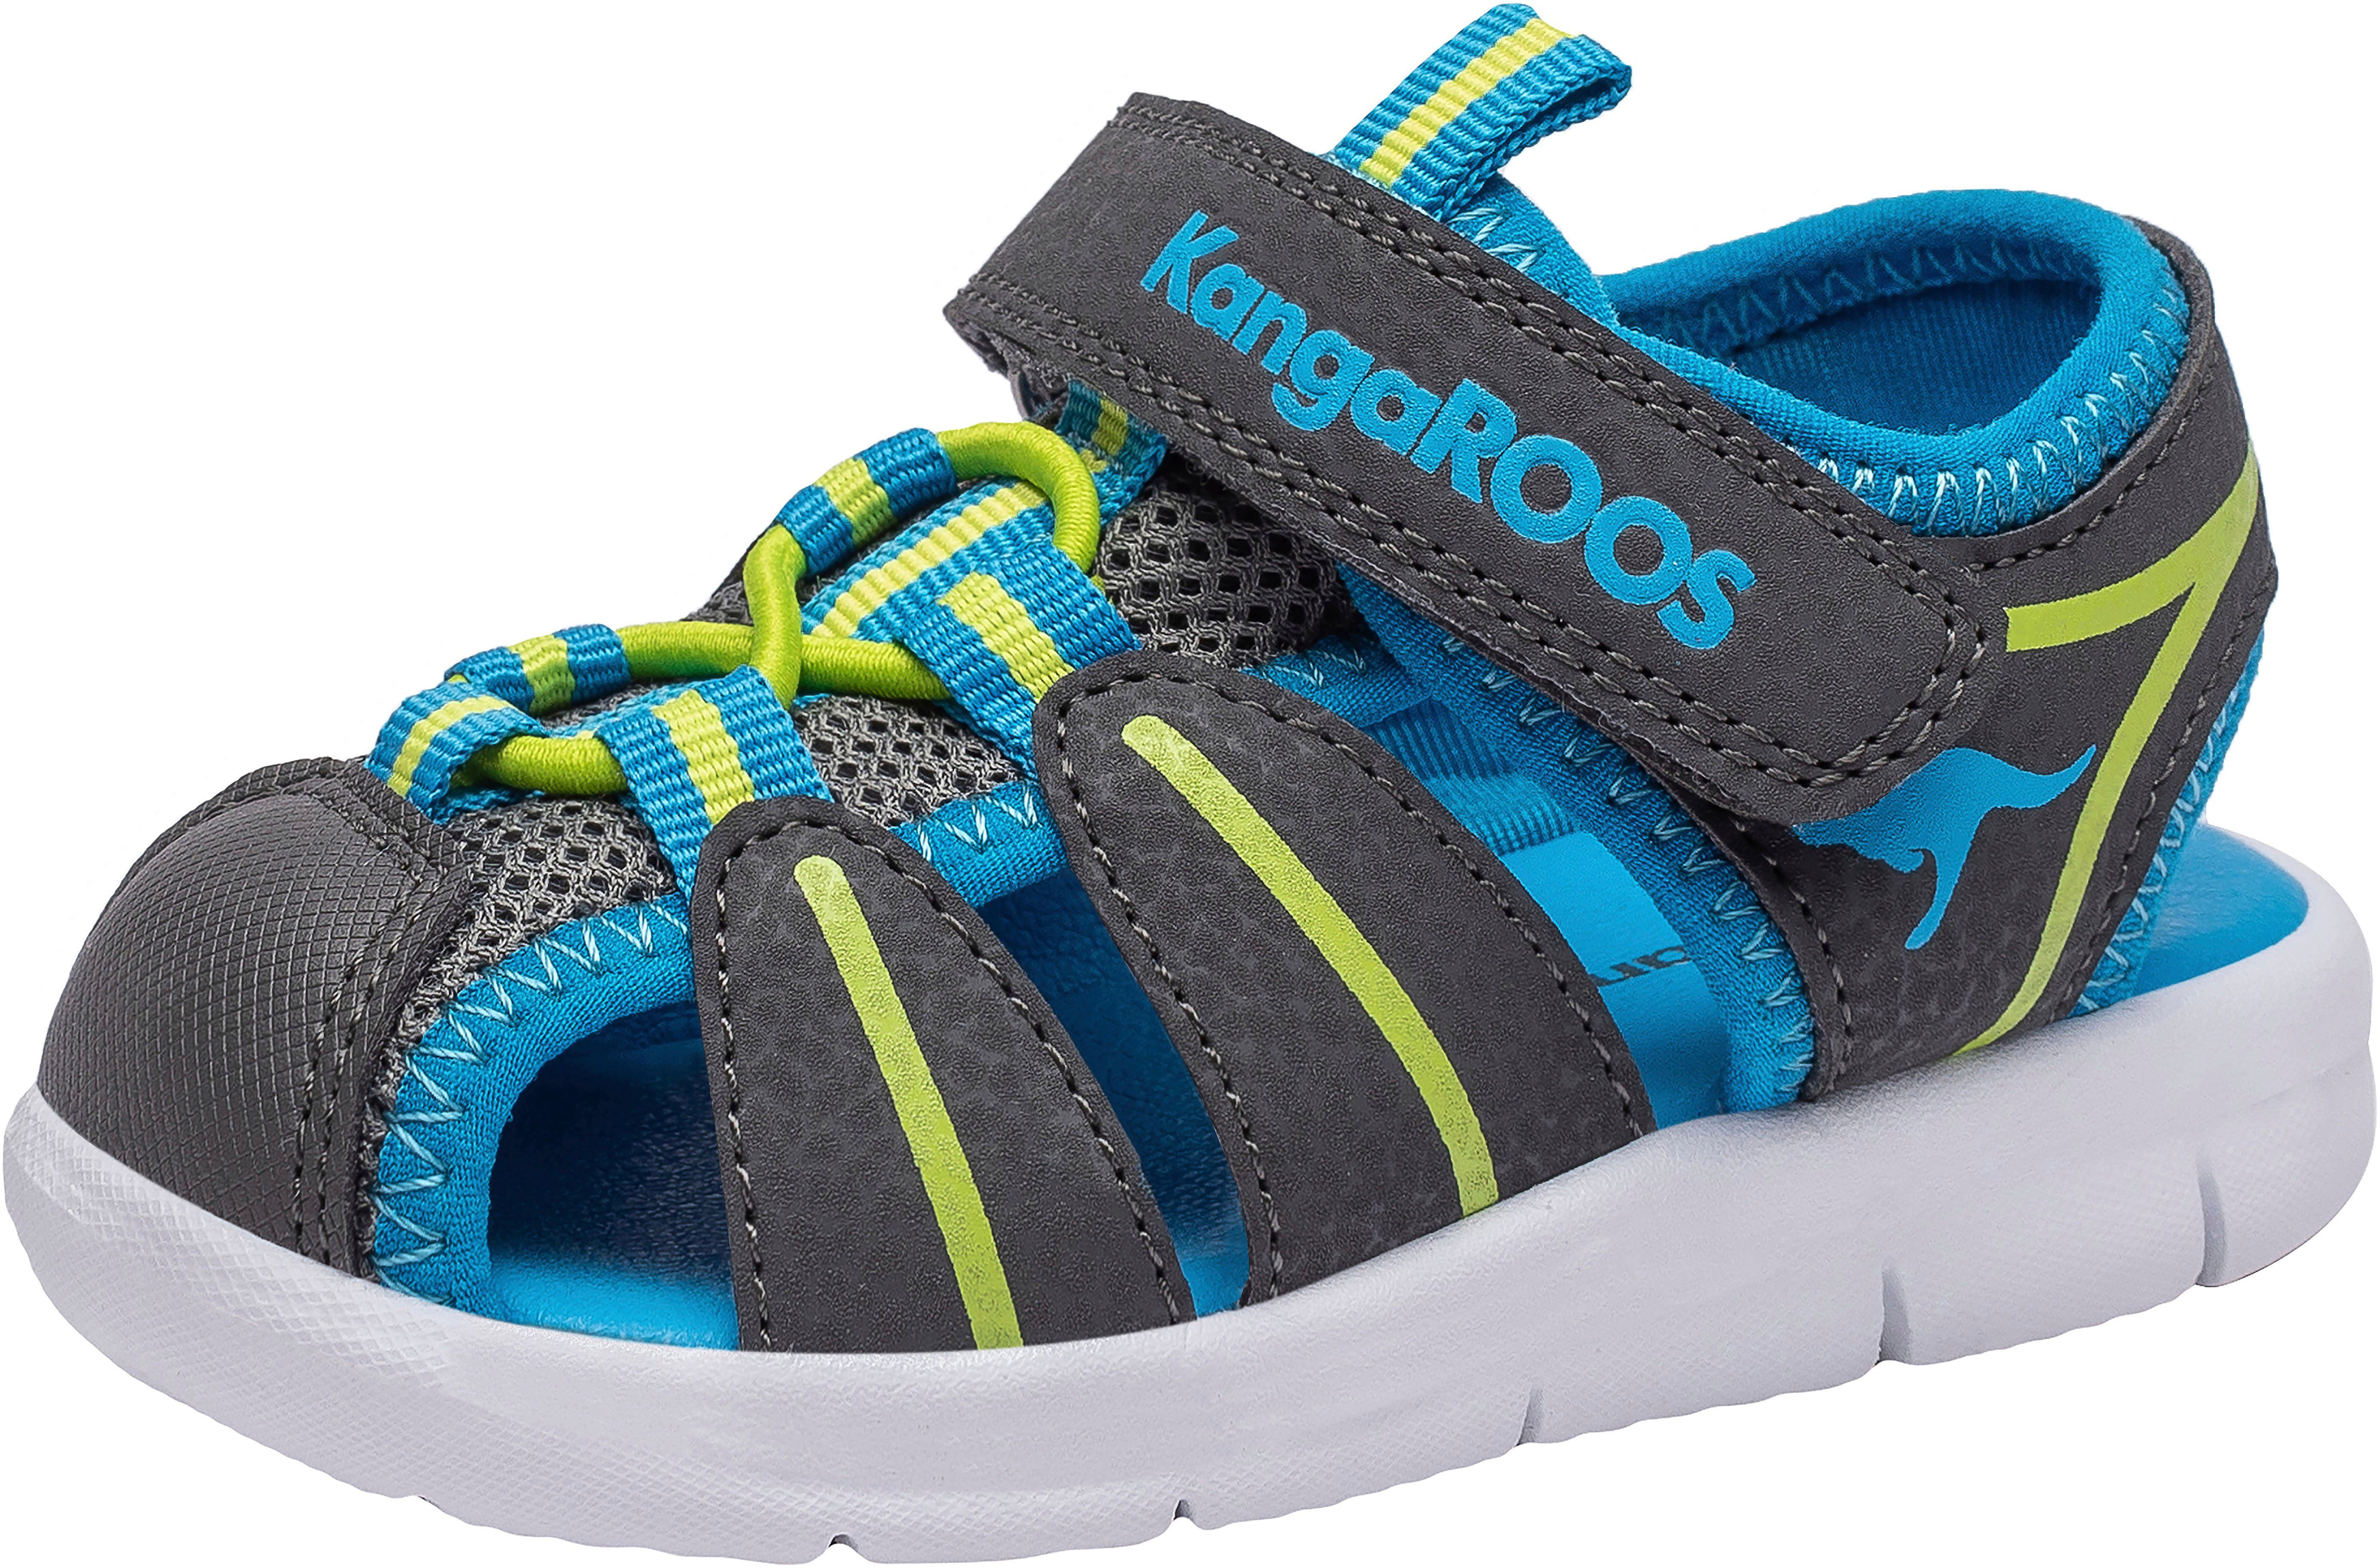 KangaROOS K-Grobi Sandale grau Klettverschluss mit